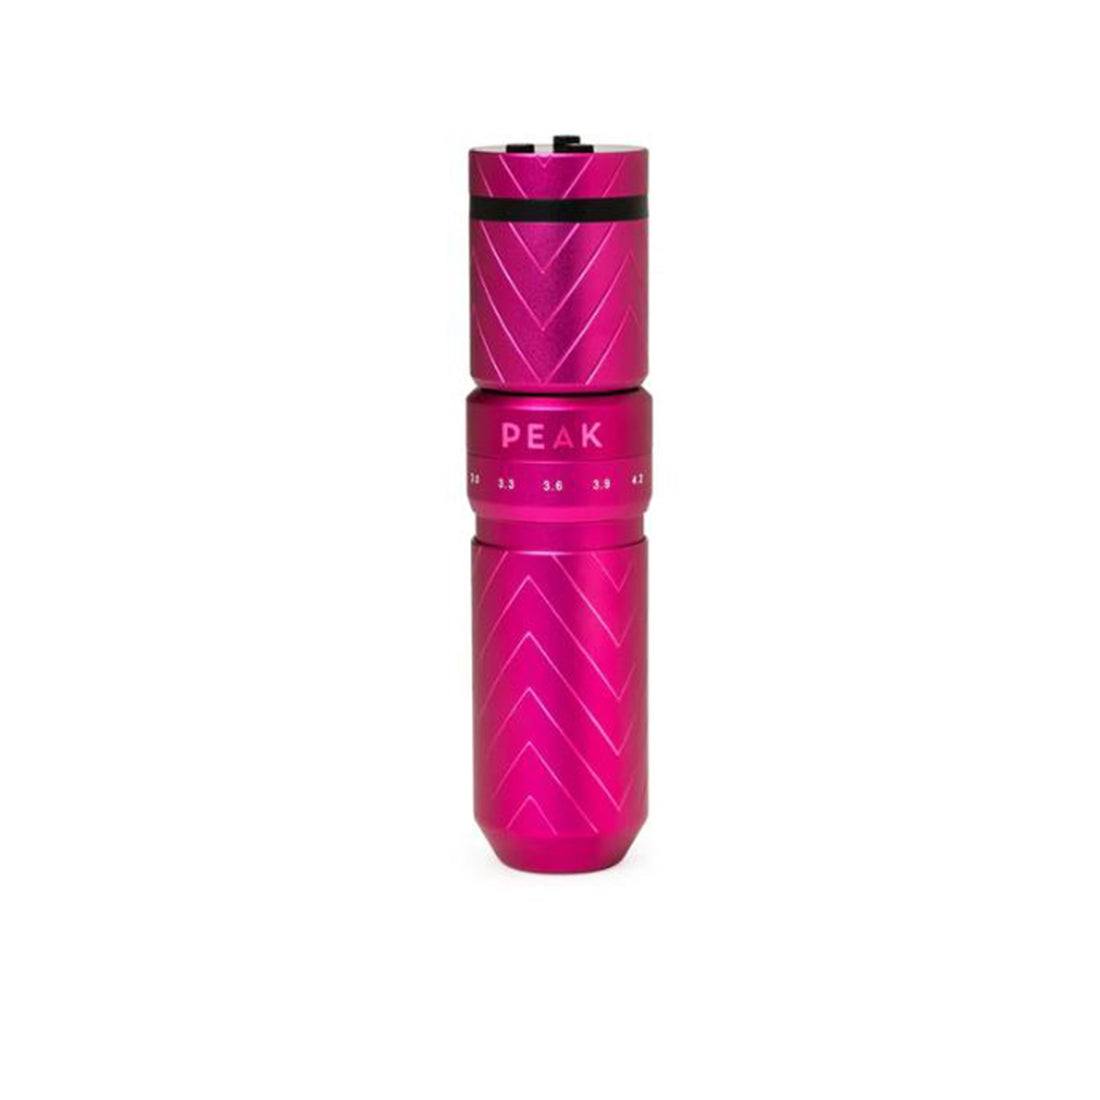 Peak Solice Pro Wireless Pen Machine - Pink